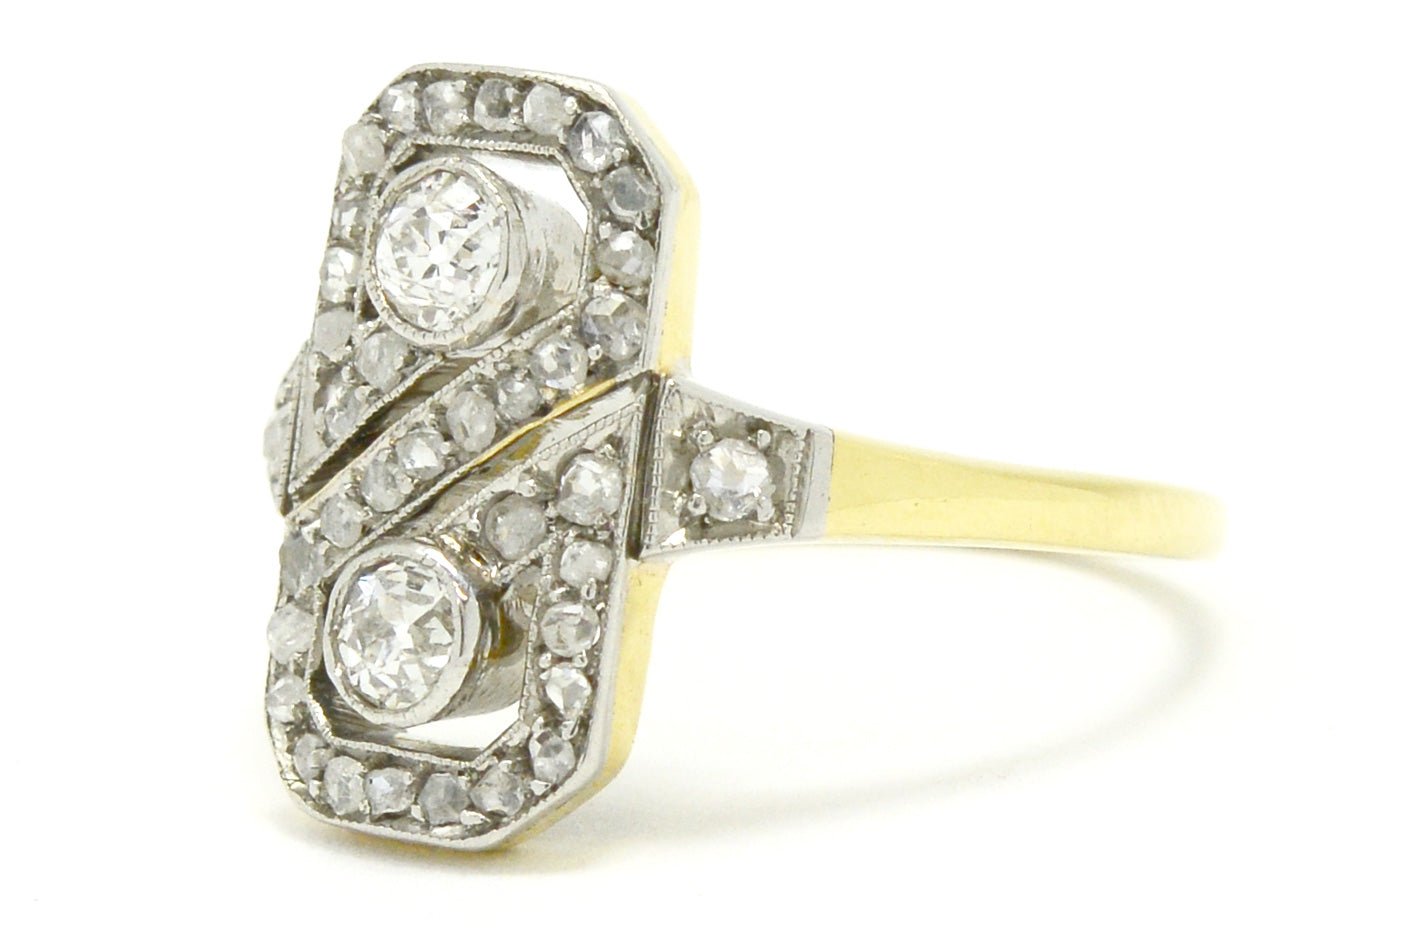 A platinum and gold 2 diamond figure 8 wedding ring design.